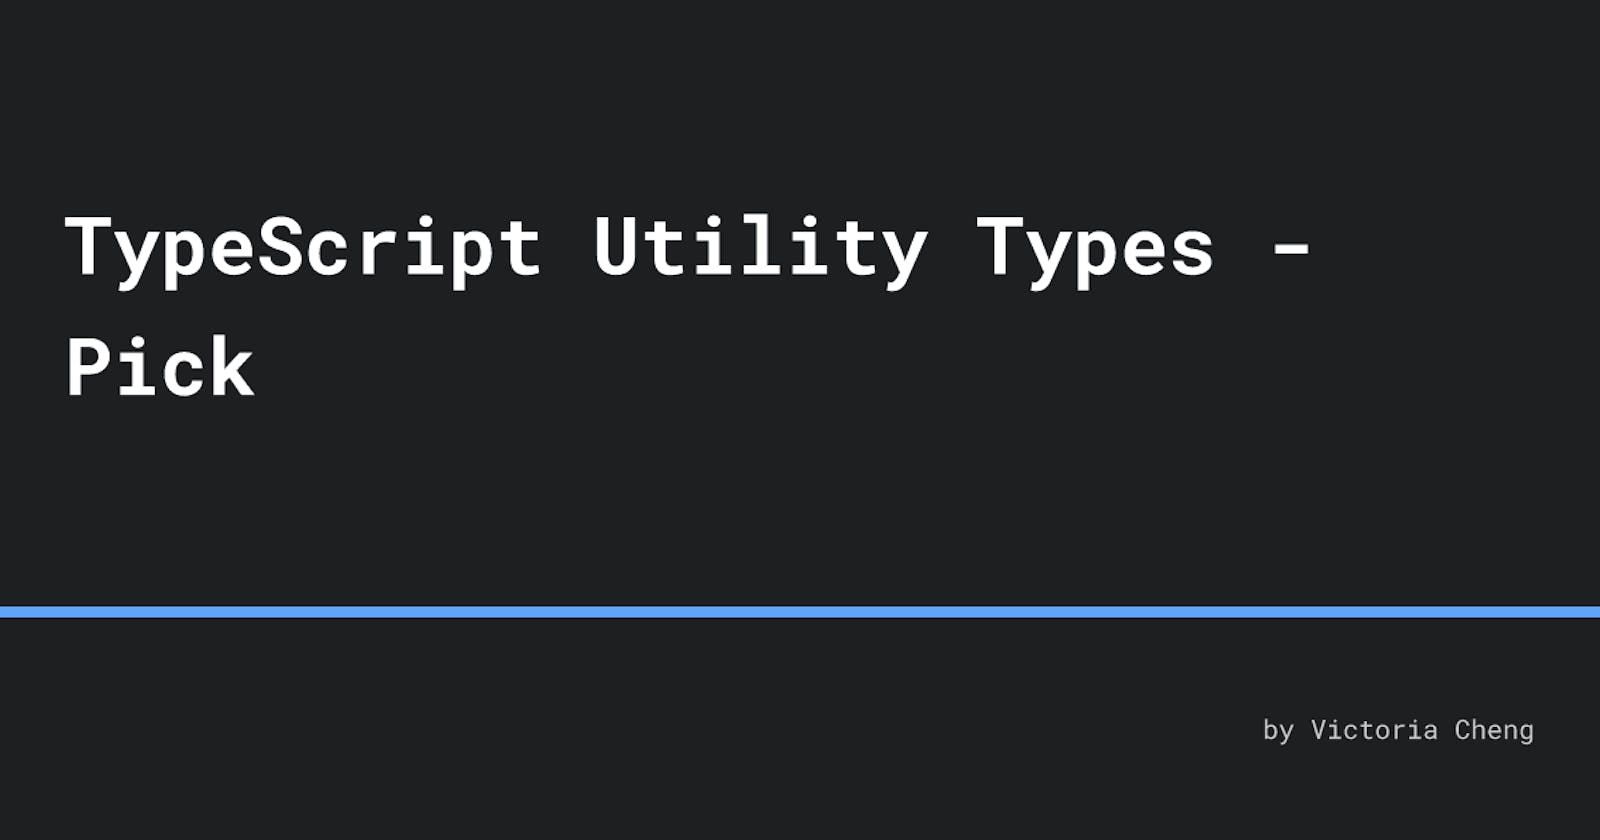 TypeScript Utility Types - Pick